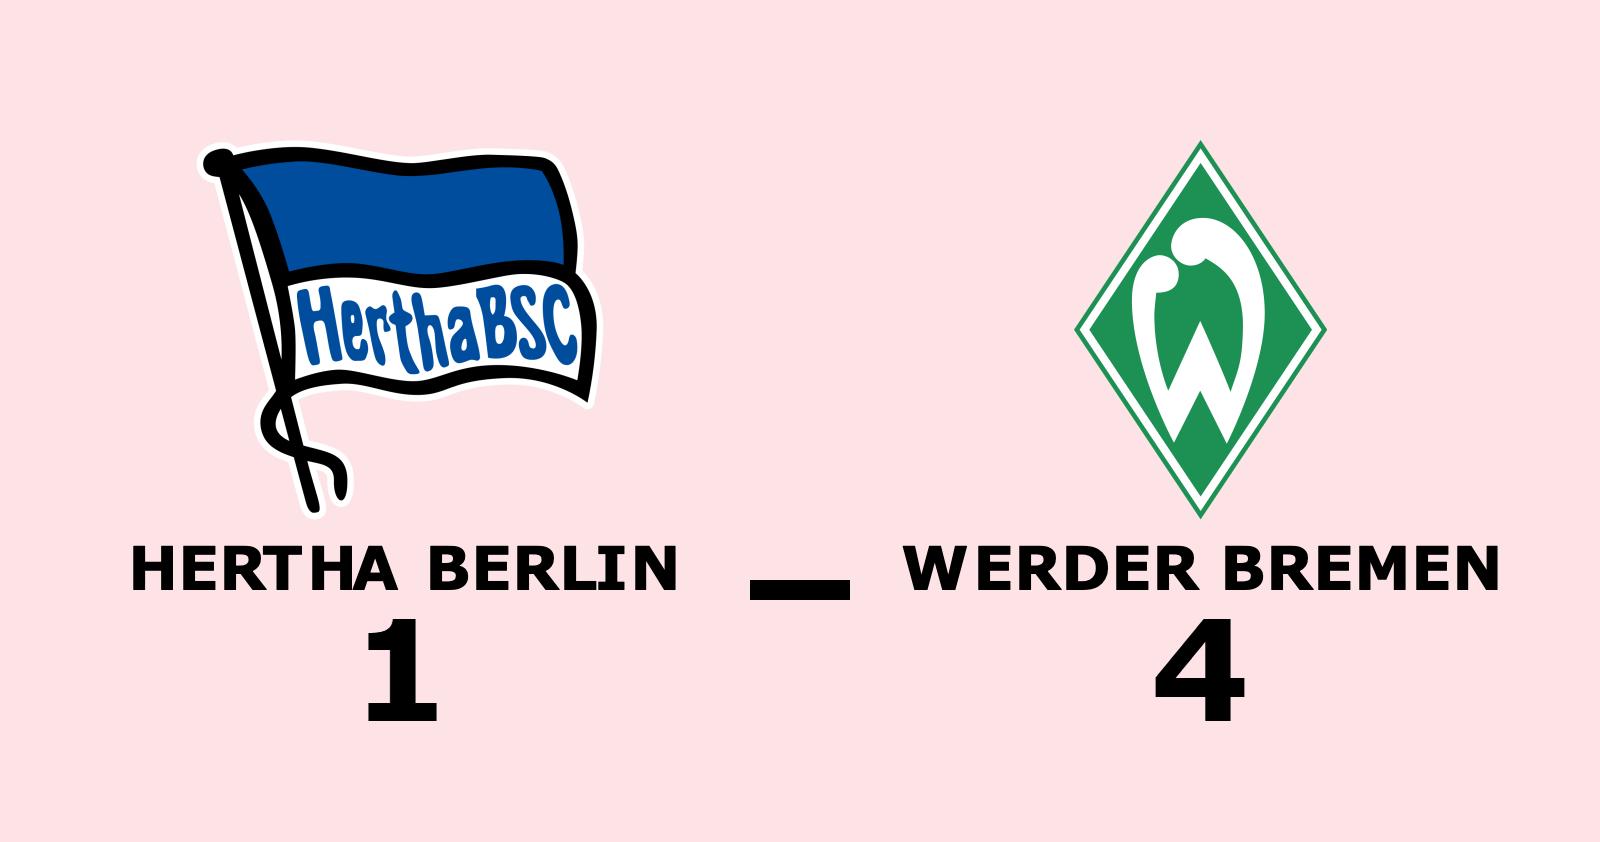 Werder Bremen tog kommandot från start mot Hertha Berlin